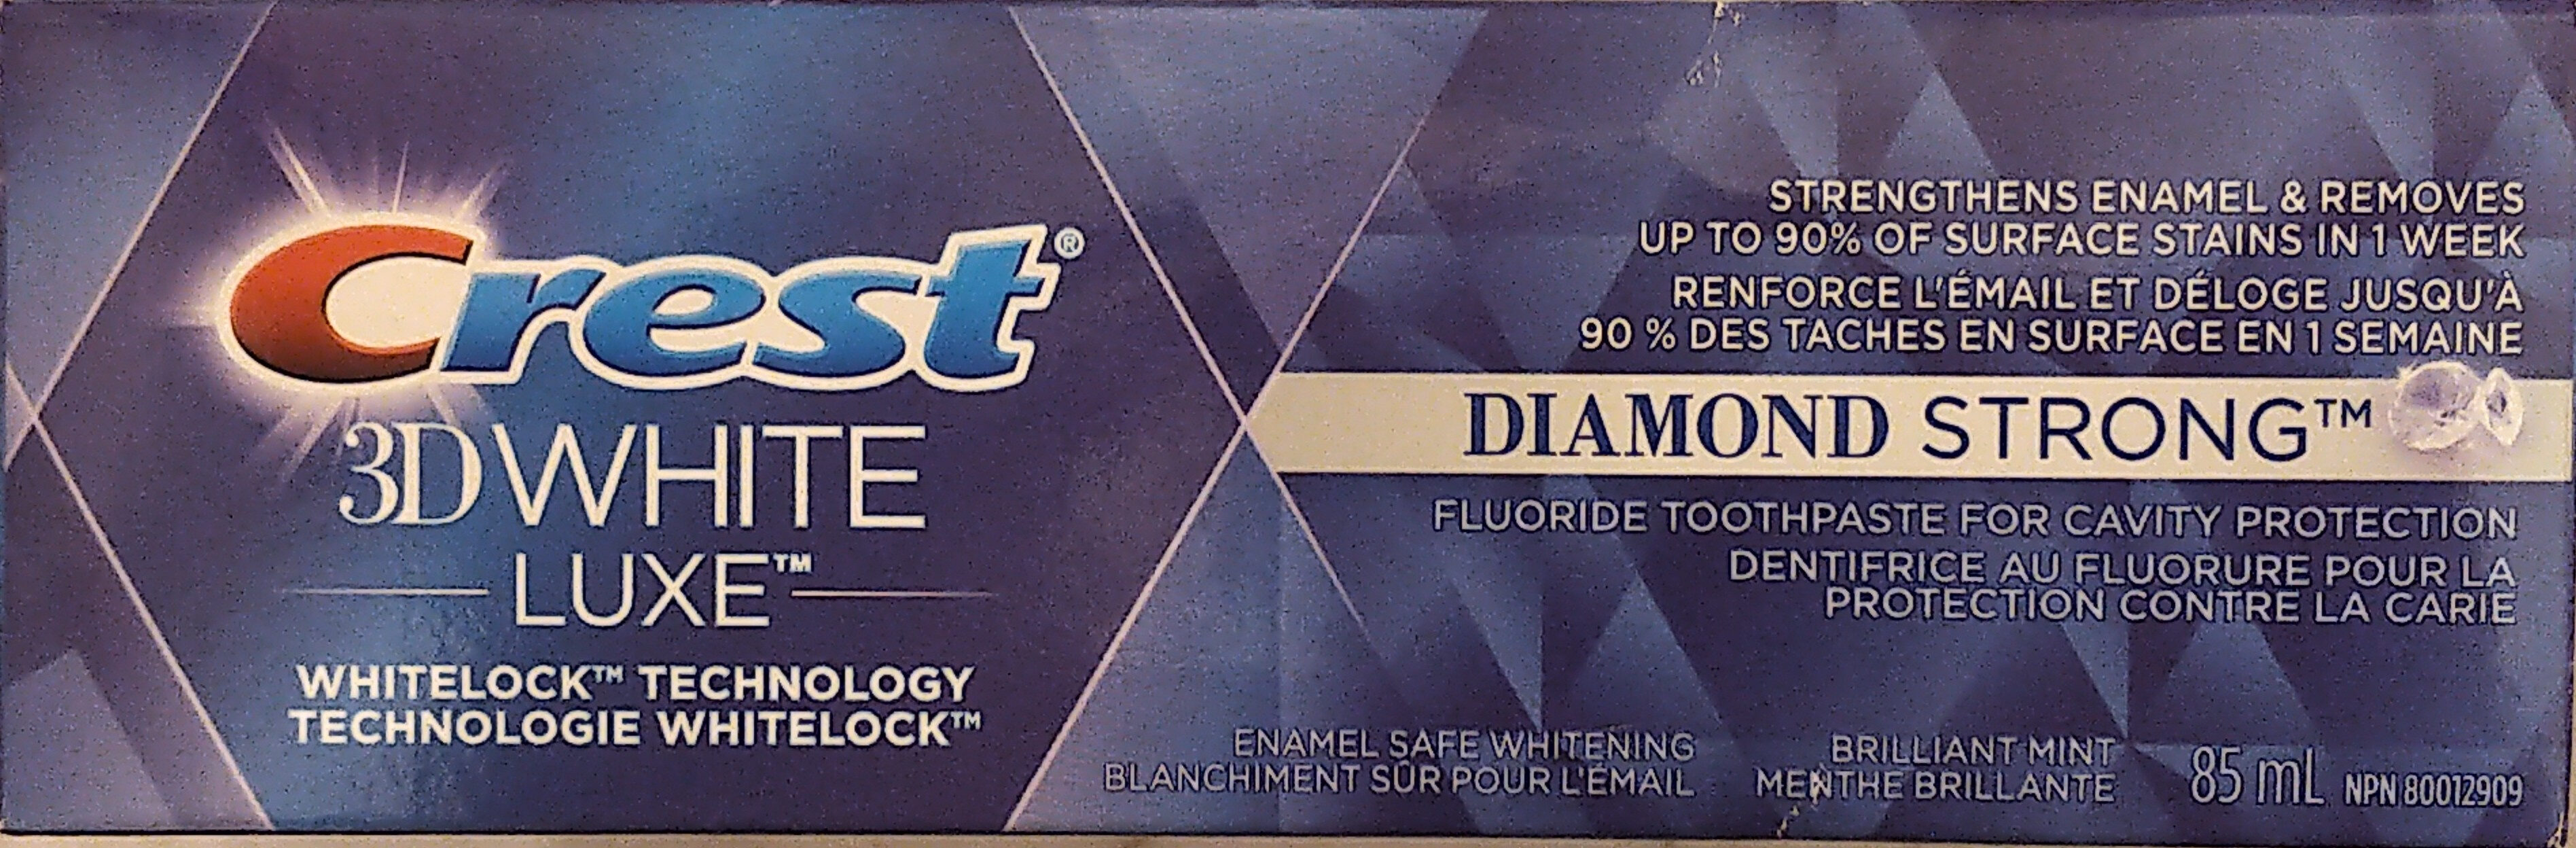 3D White Luxe Diamond Strong Brilliant Mint Fluoride Toothpaste - Produkto - en